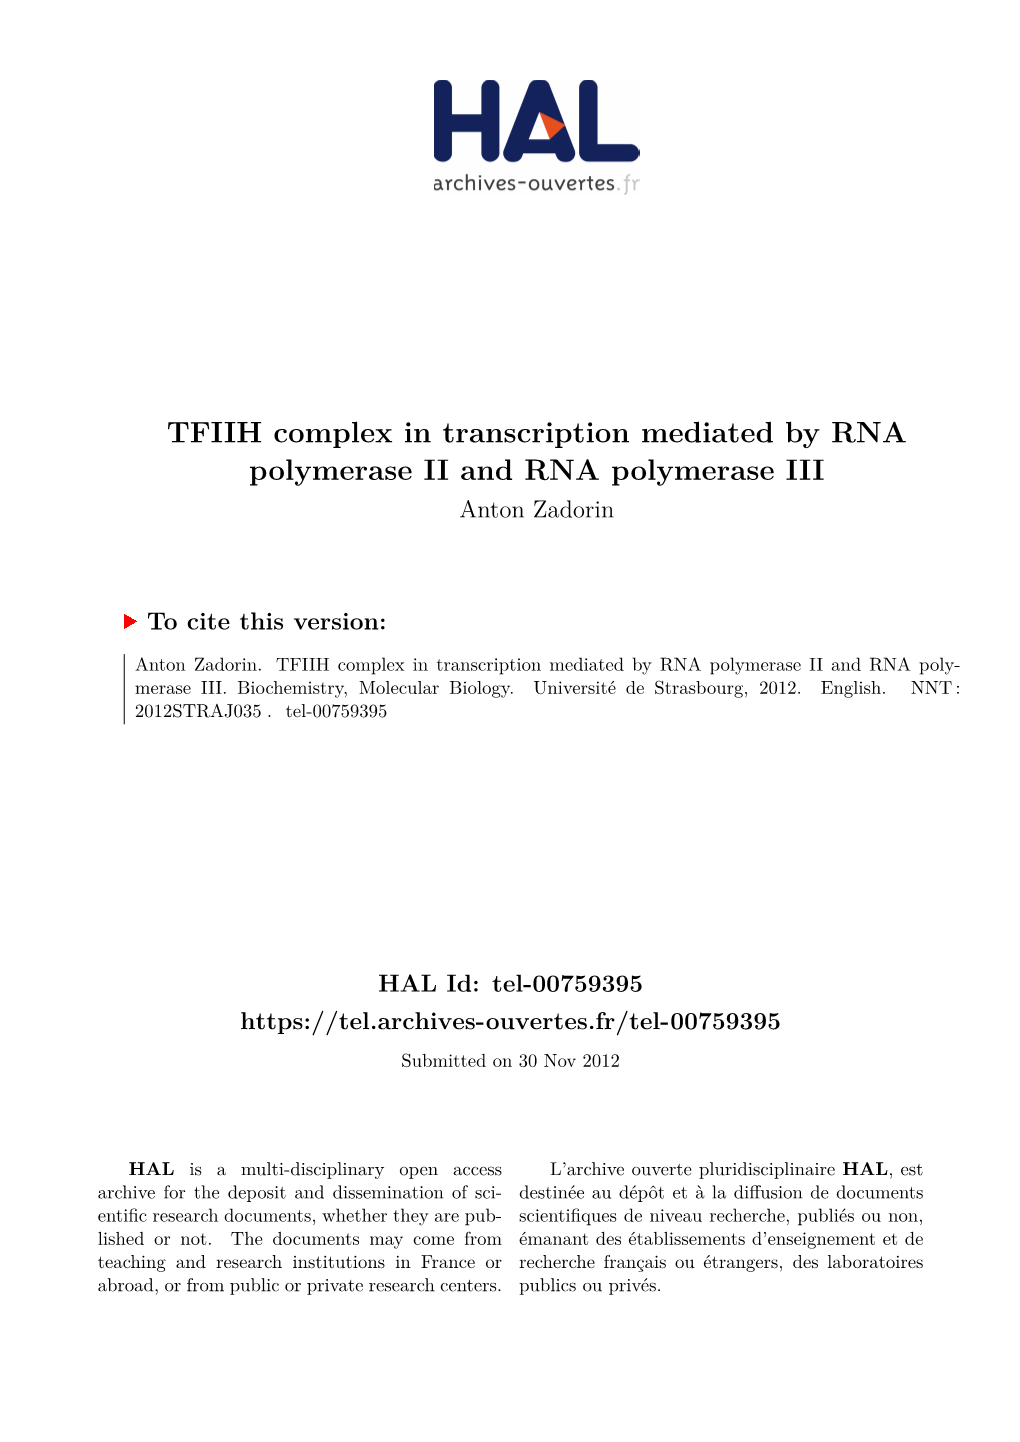 TFIIH and Transcription by Pol III